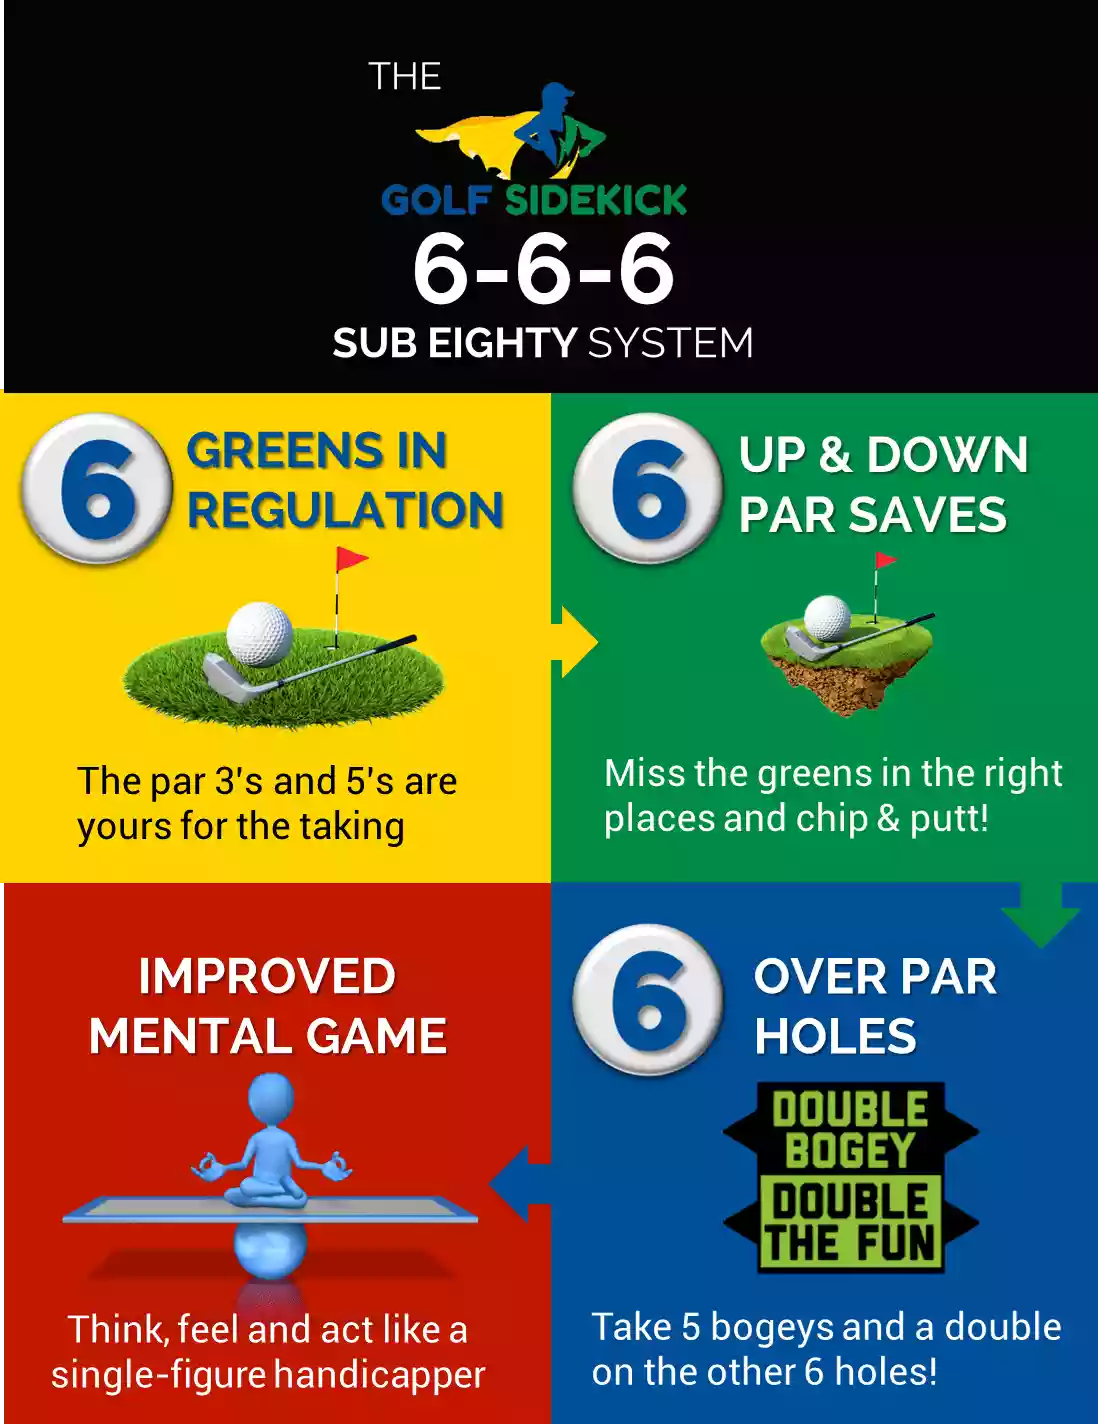 Golf Strategy: How to Break 80 in Golf – My 666 Method - Golf Sidekick